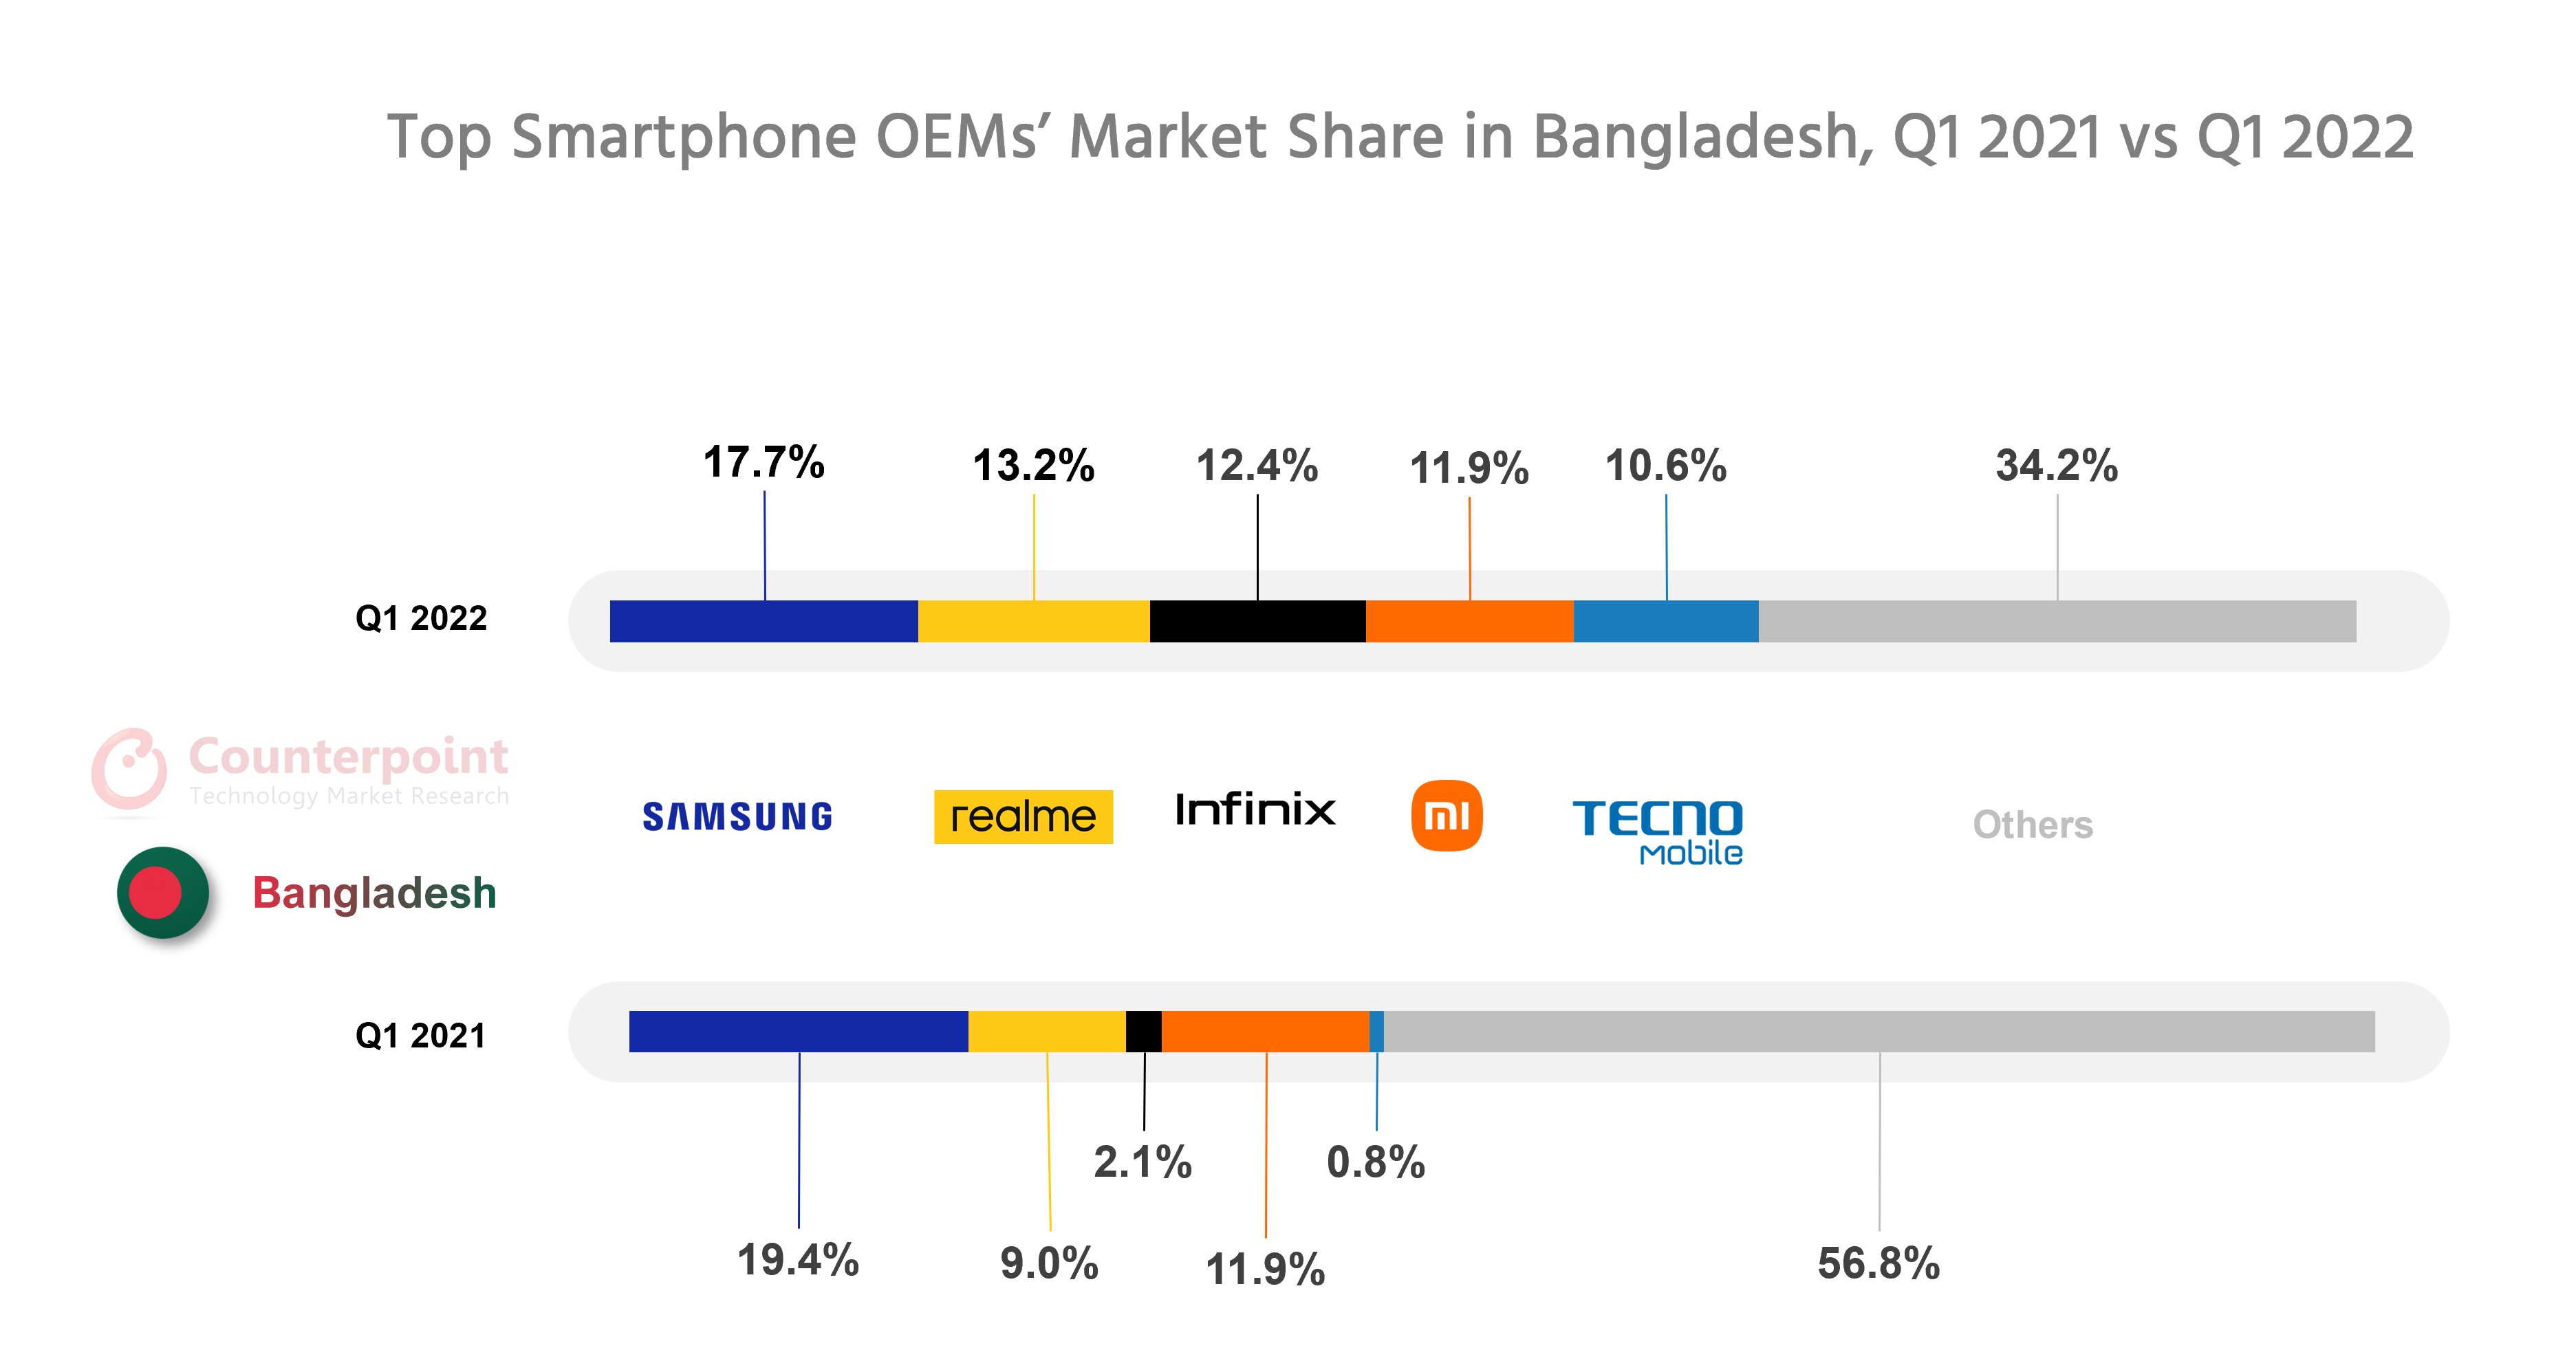 Top Smartphone OEM's Market Share in Bangladesh Q1 2022 vs Q1 2021